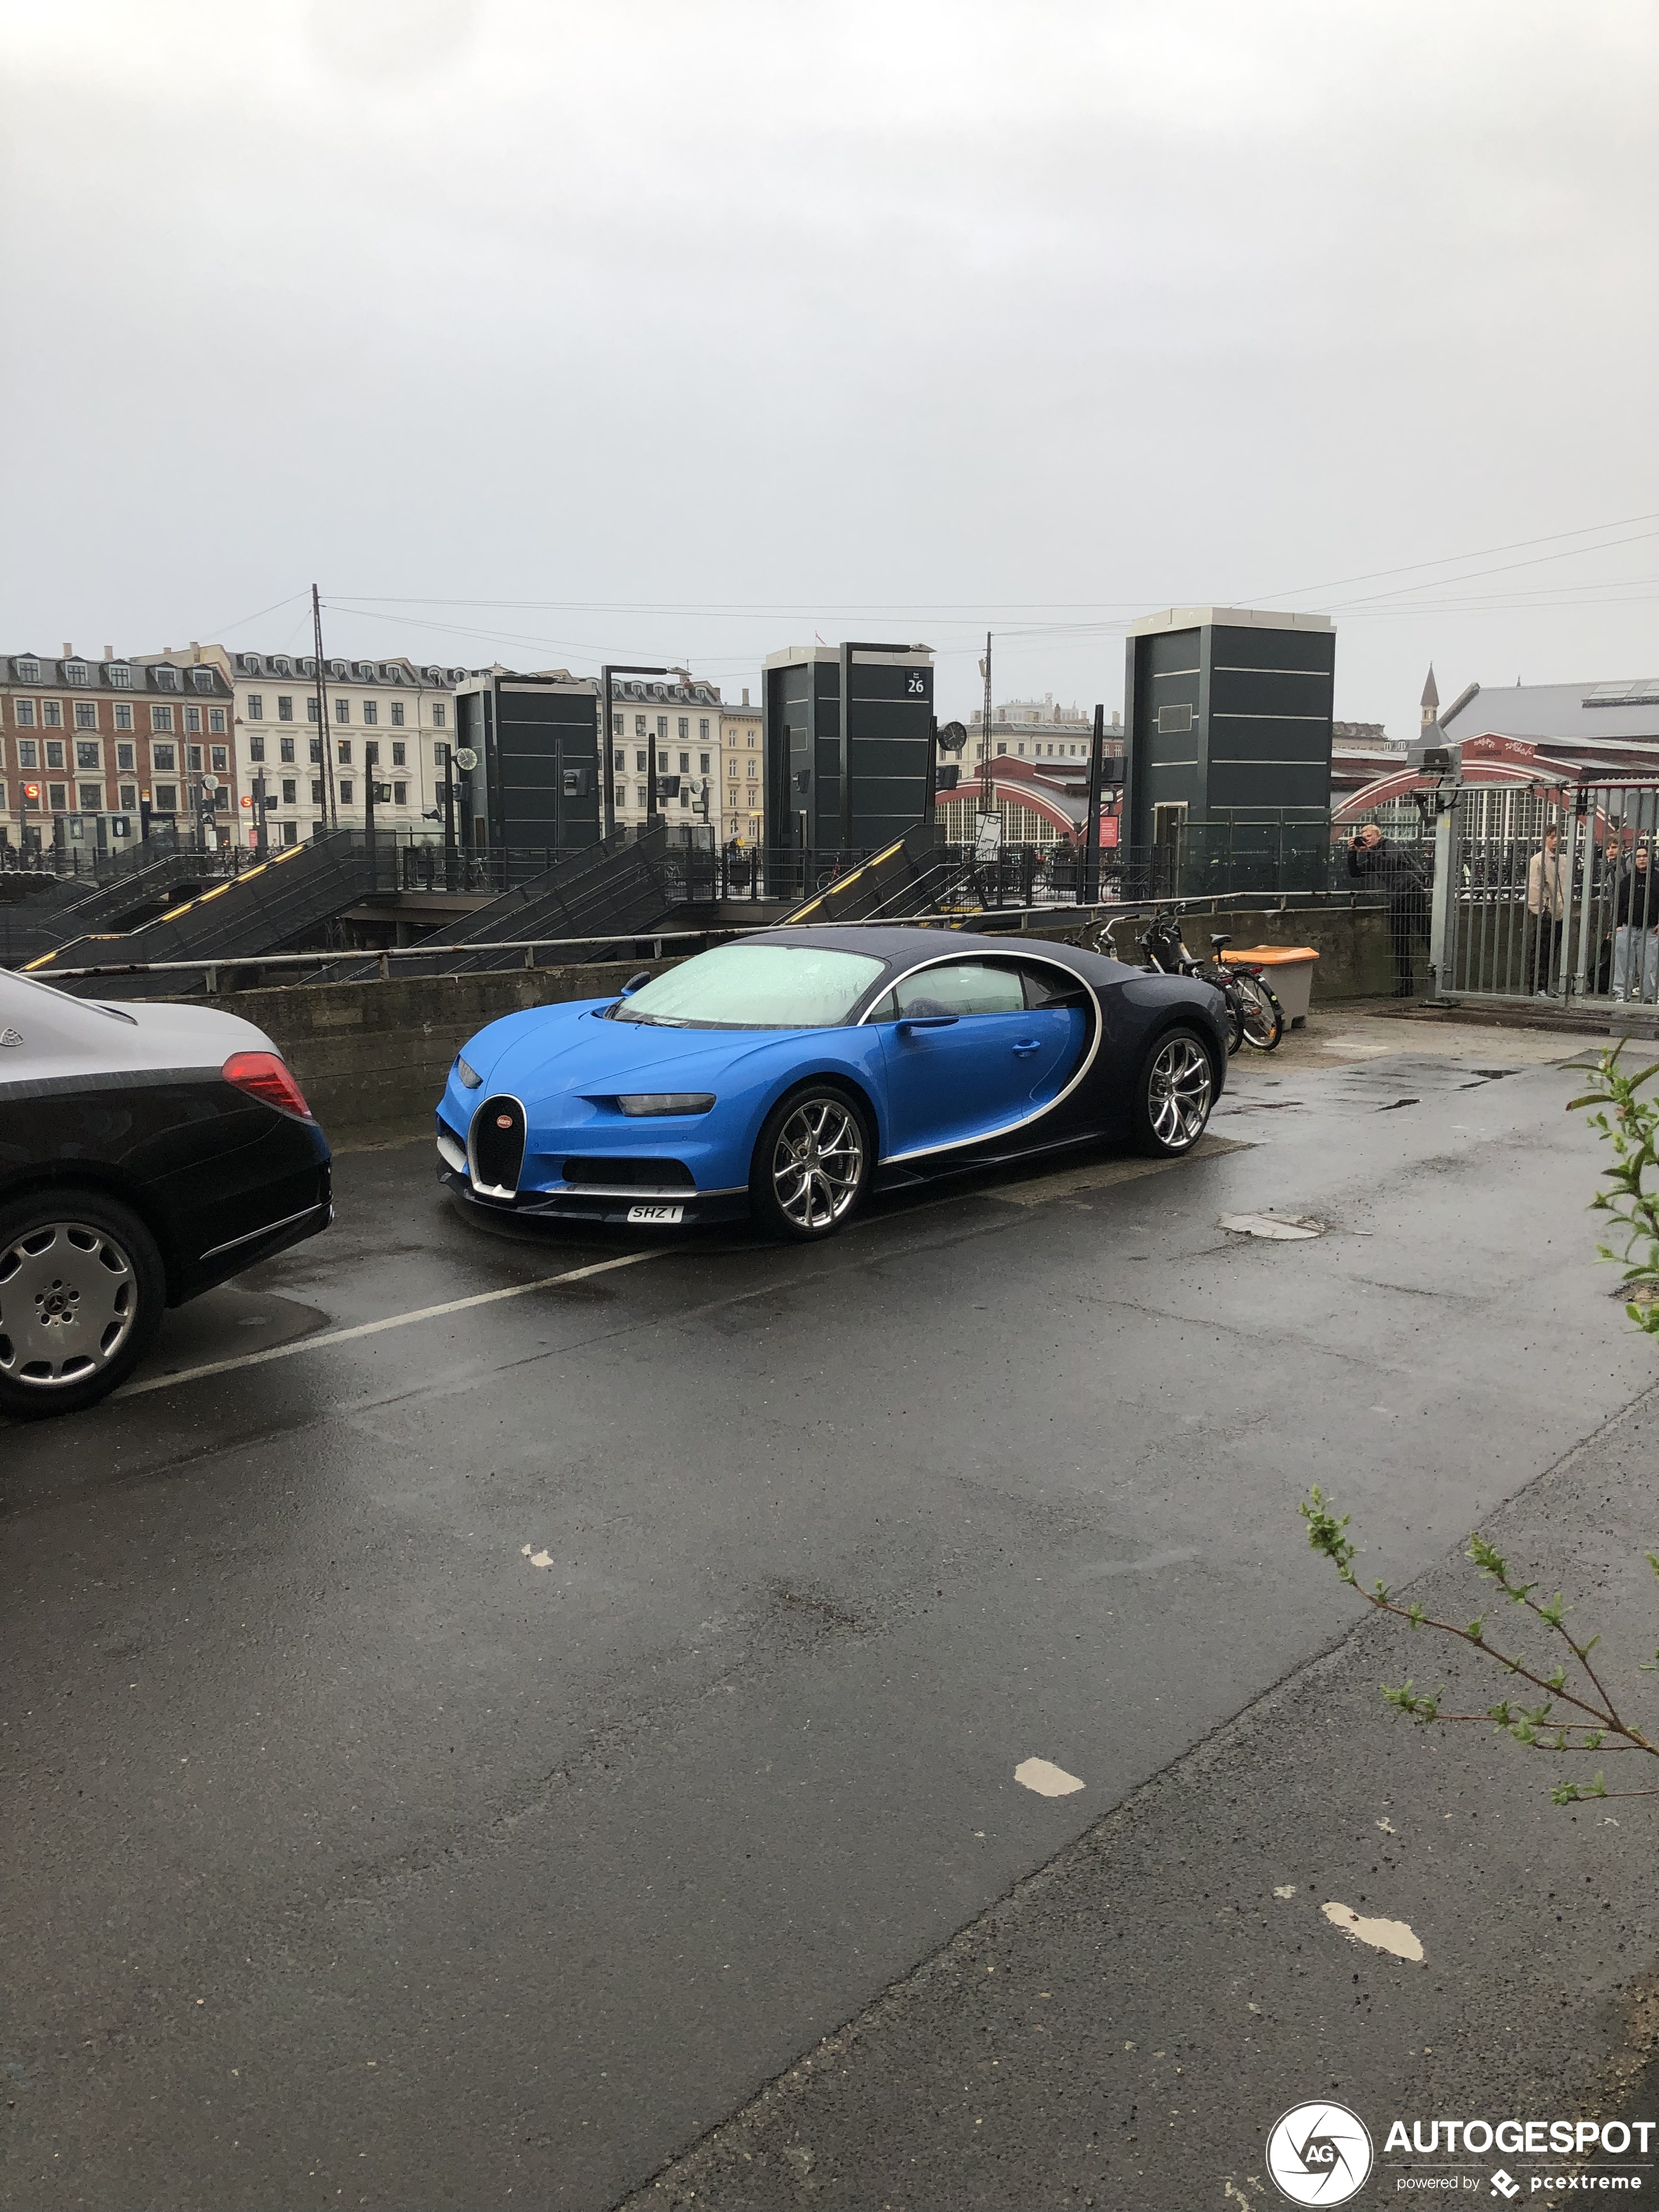 The first Bugatti from Denmark